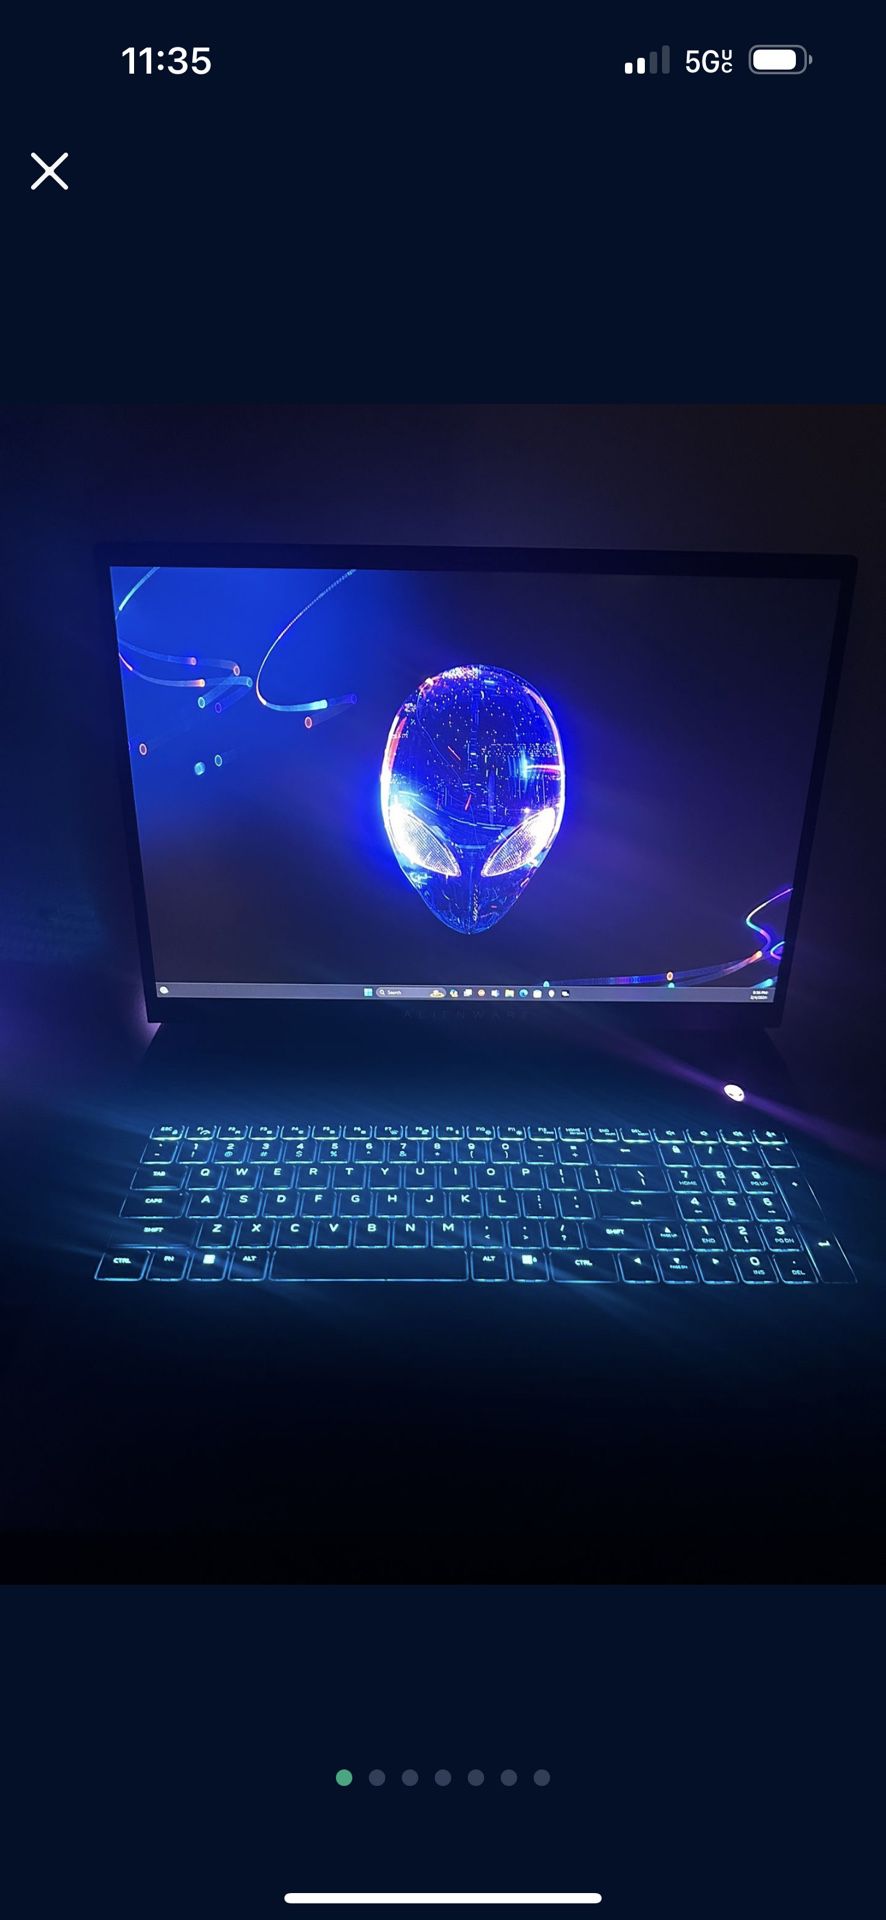 Alienware M18 Gaming Laptop